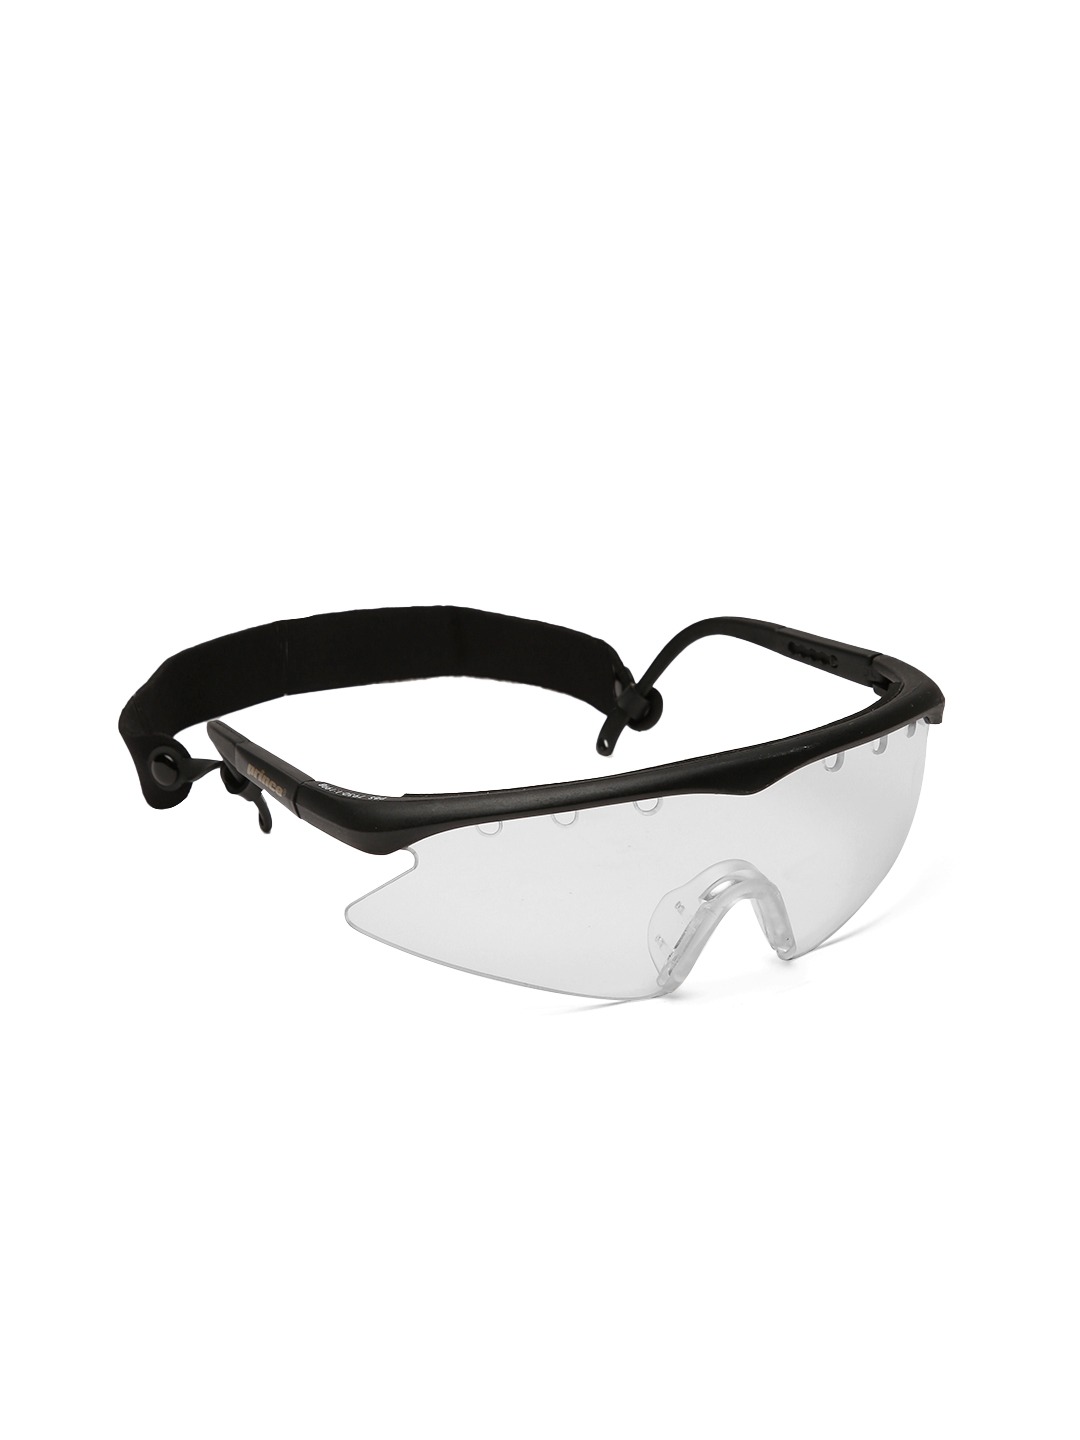 Accessories Sports Accessories | prince Black Rage Squash Eye Guard SQPG003 - GO25504